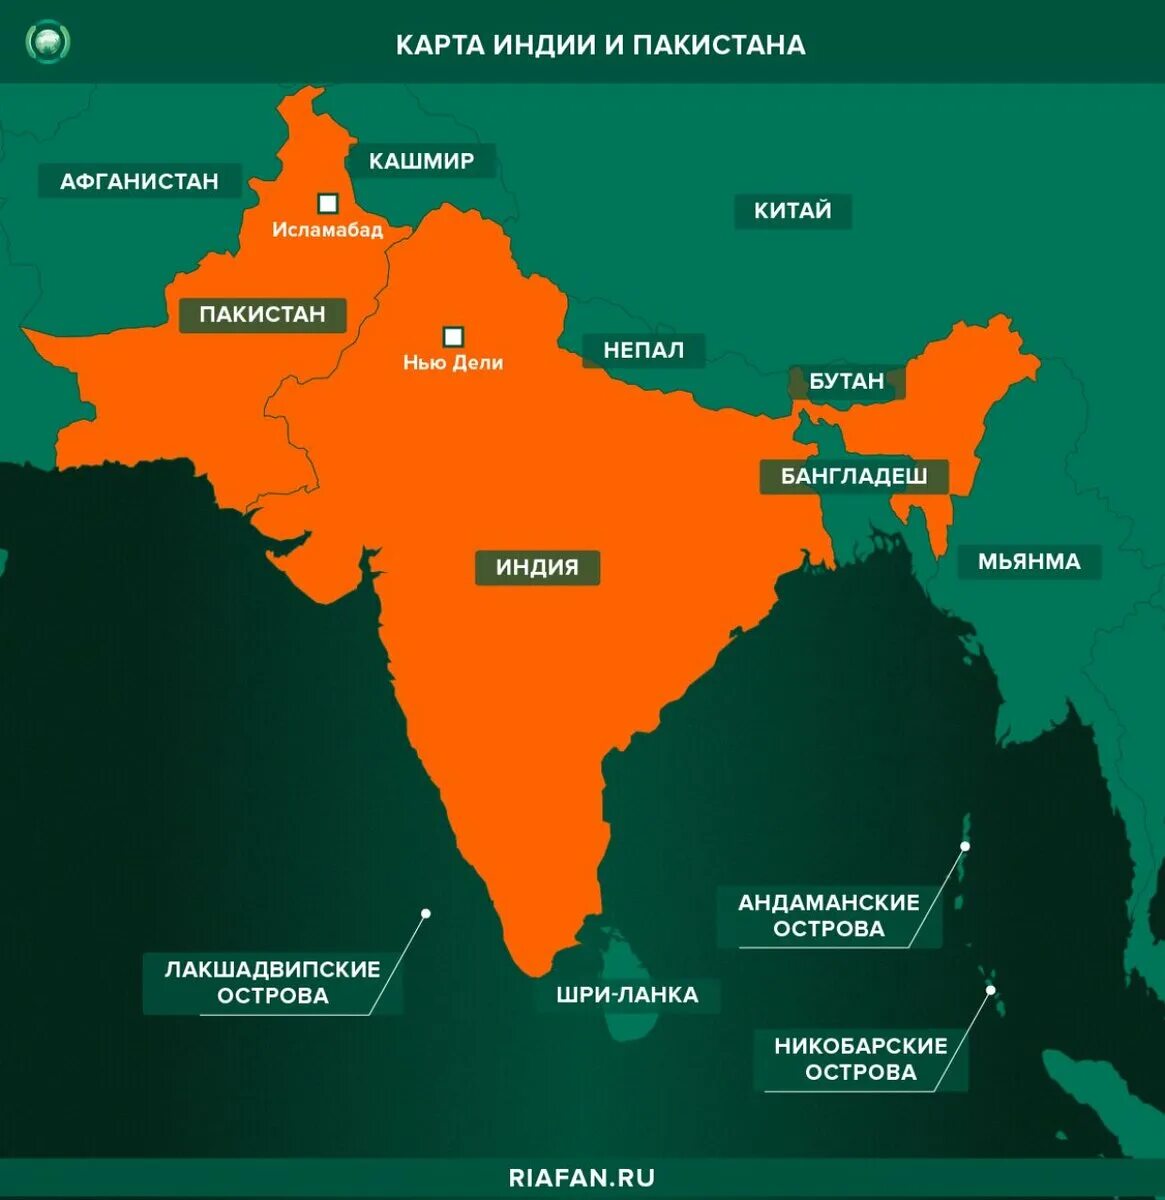 Сколько стран в индии. Индия и Пакистан на карте. Индия и Пакистан конфликт на карте. Индия и Пакистан на карте территории. Спорная территория Индии и Пакистана.